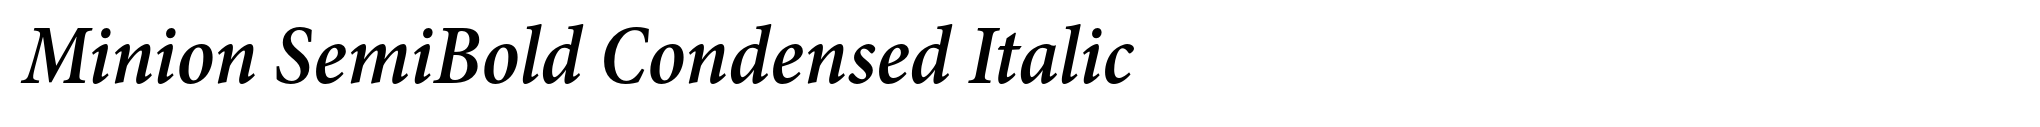 Minion SemiBold Condensed Italic image